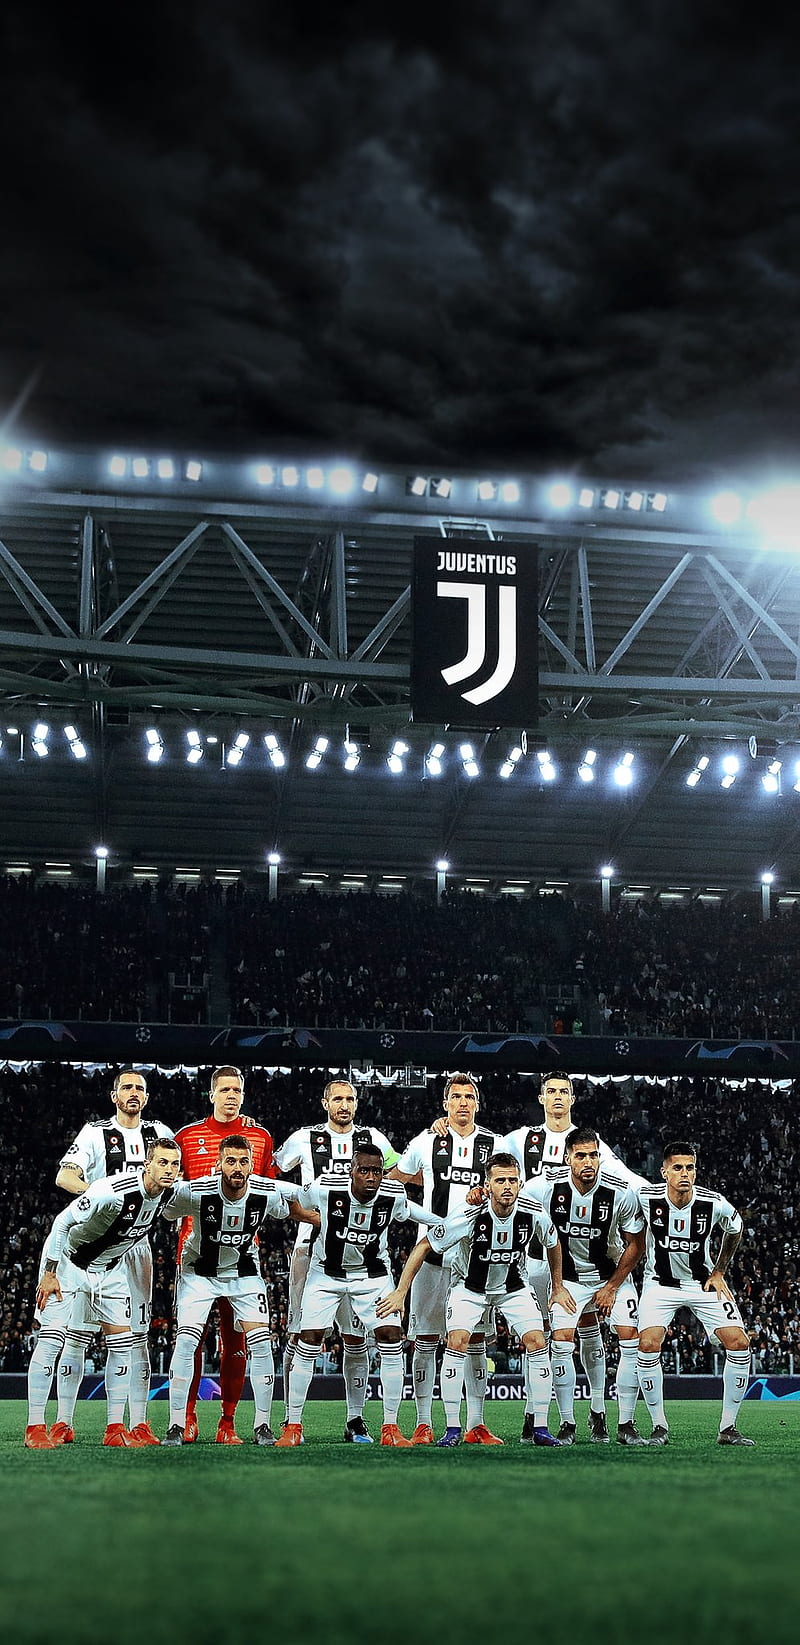 CR7 Juventus Wallpaper Mobile by Hokage455 on DeviantArt